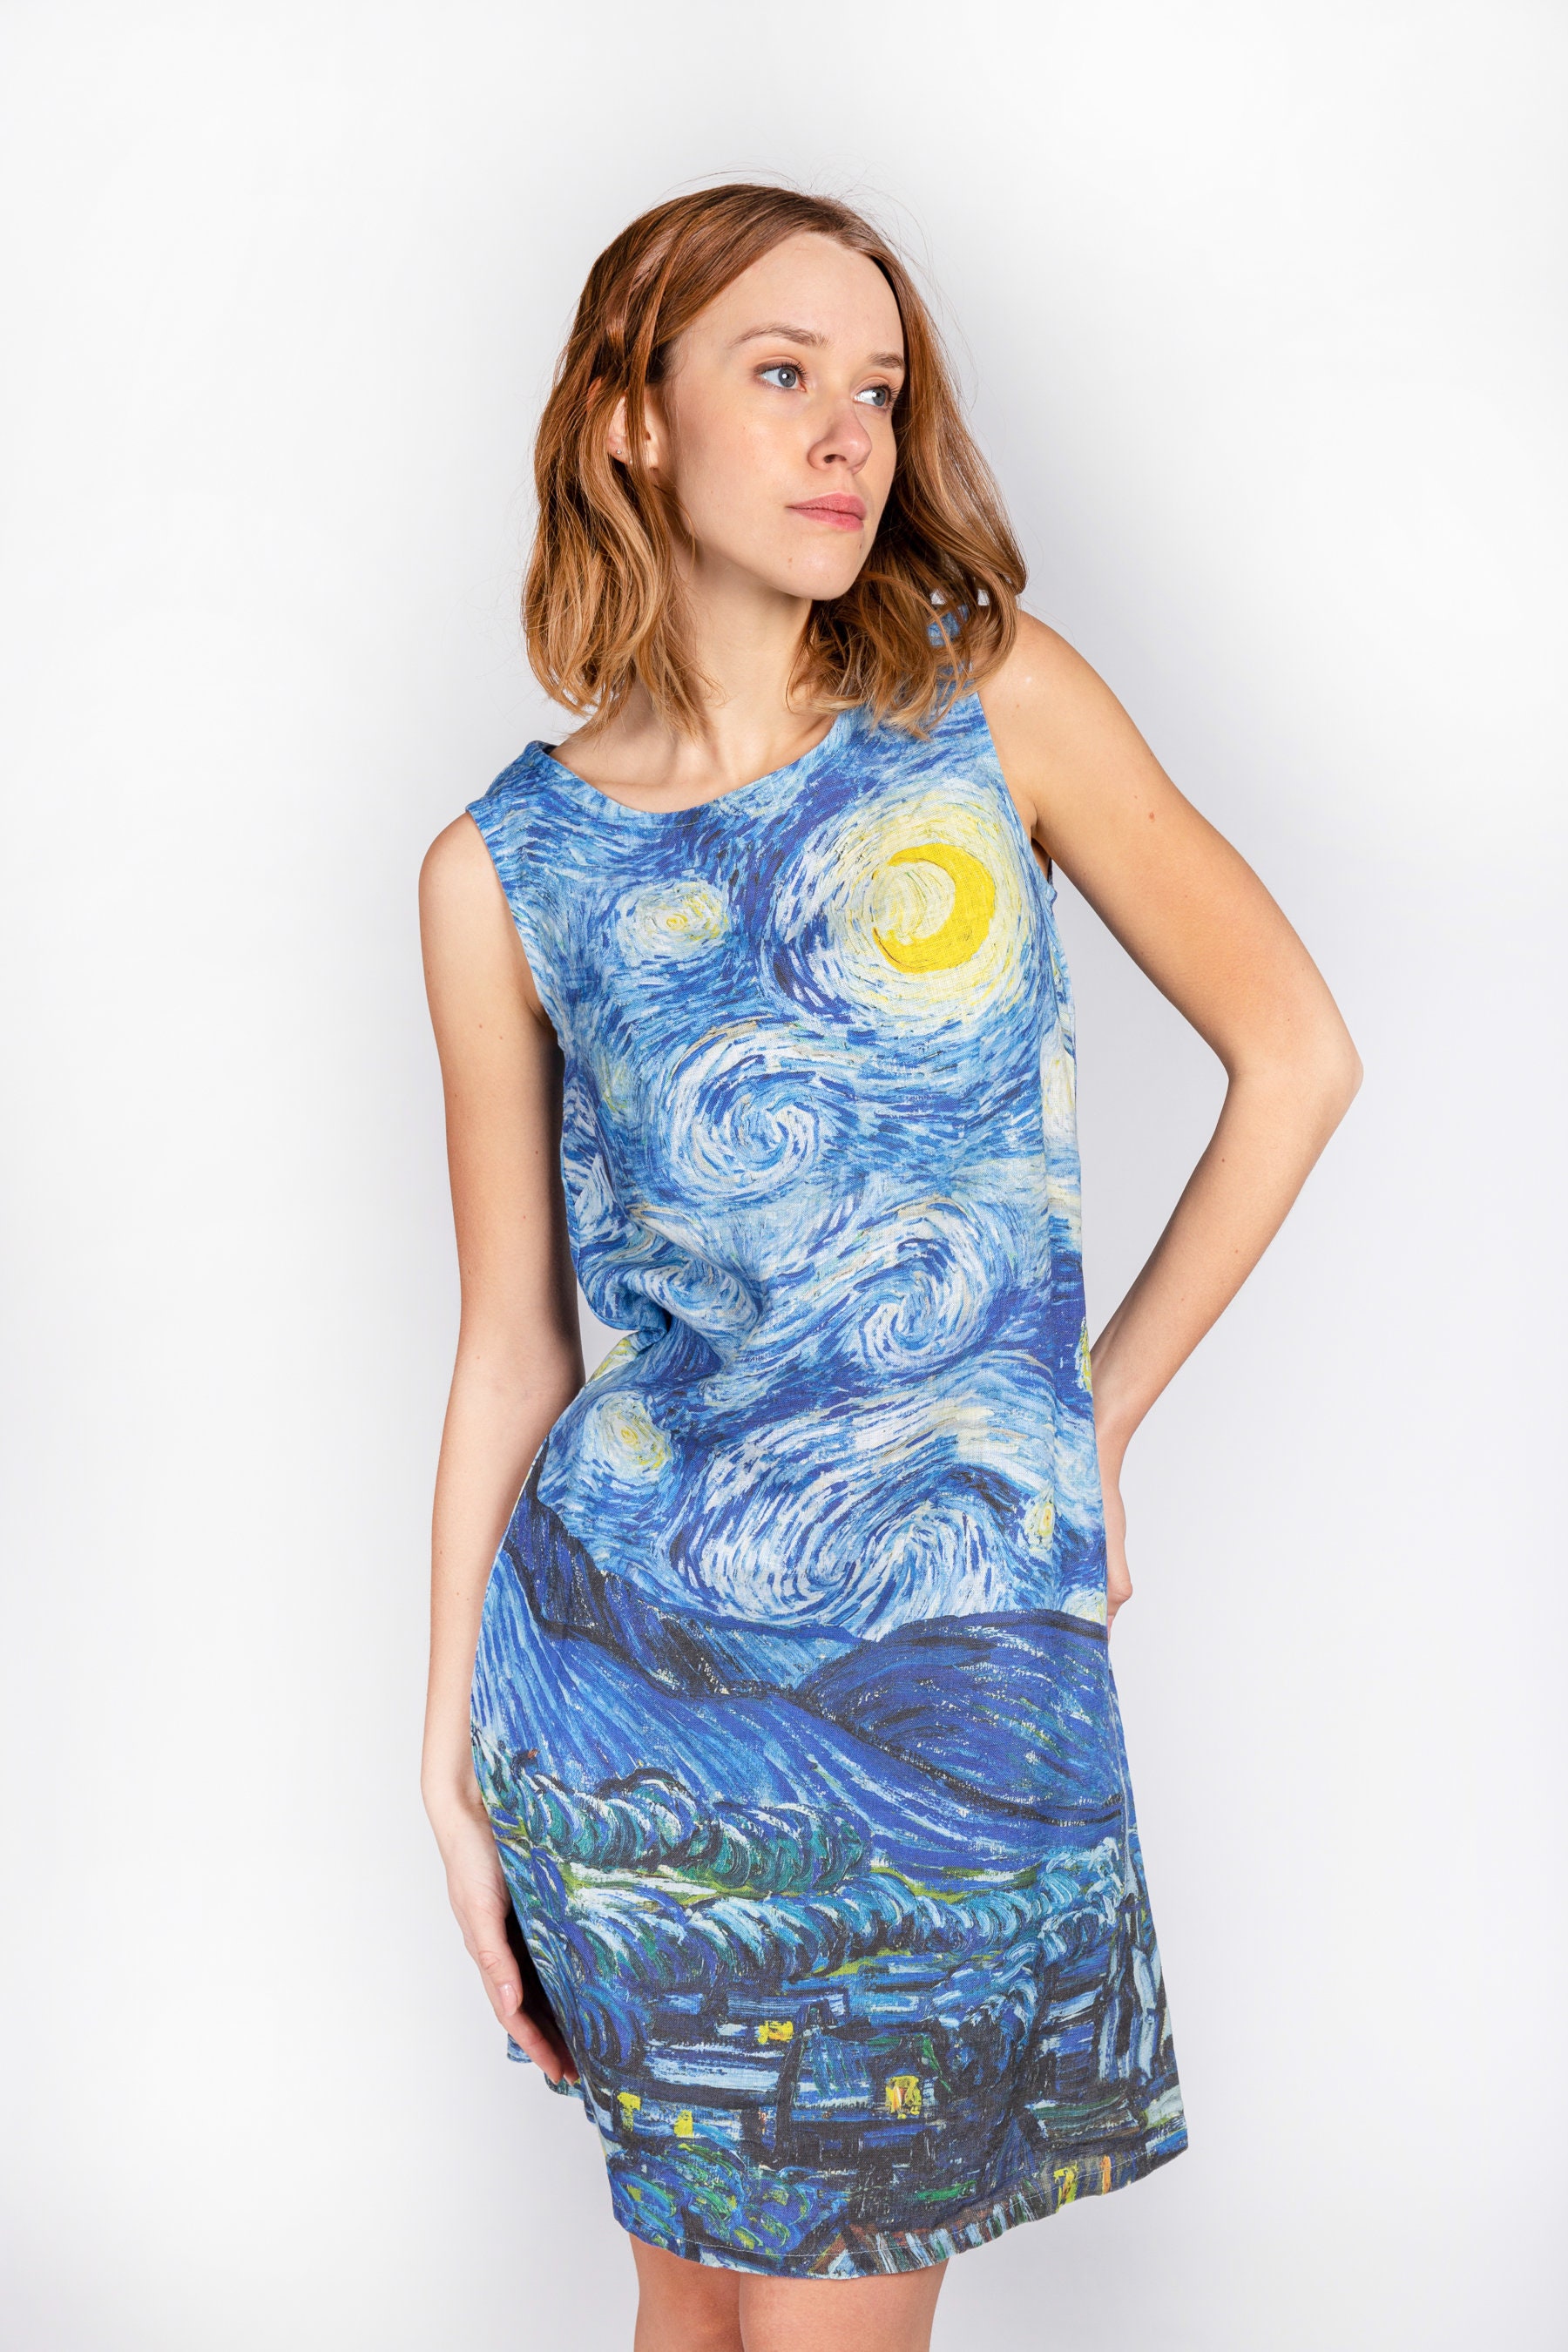 Starry Night Vincent van Gogh Linen dress Linen tunic 100% - Etsy México